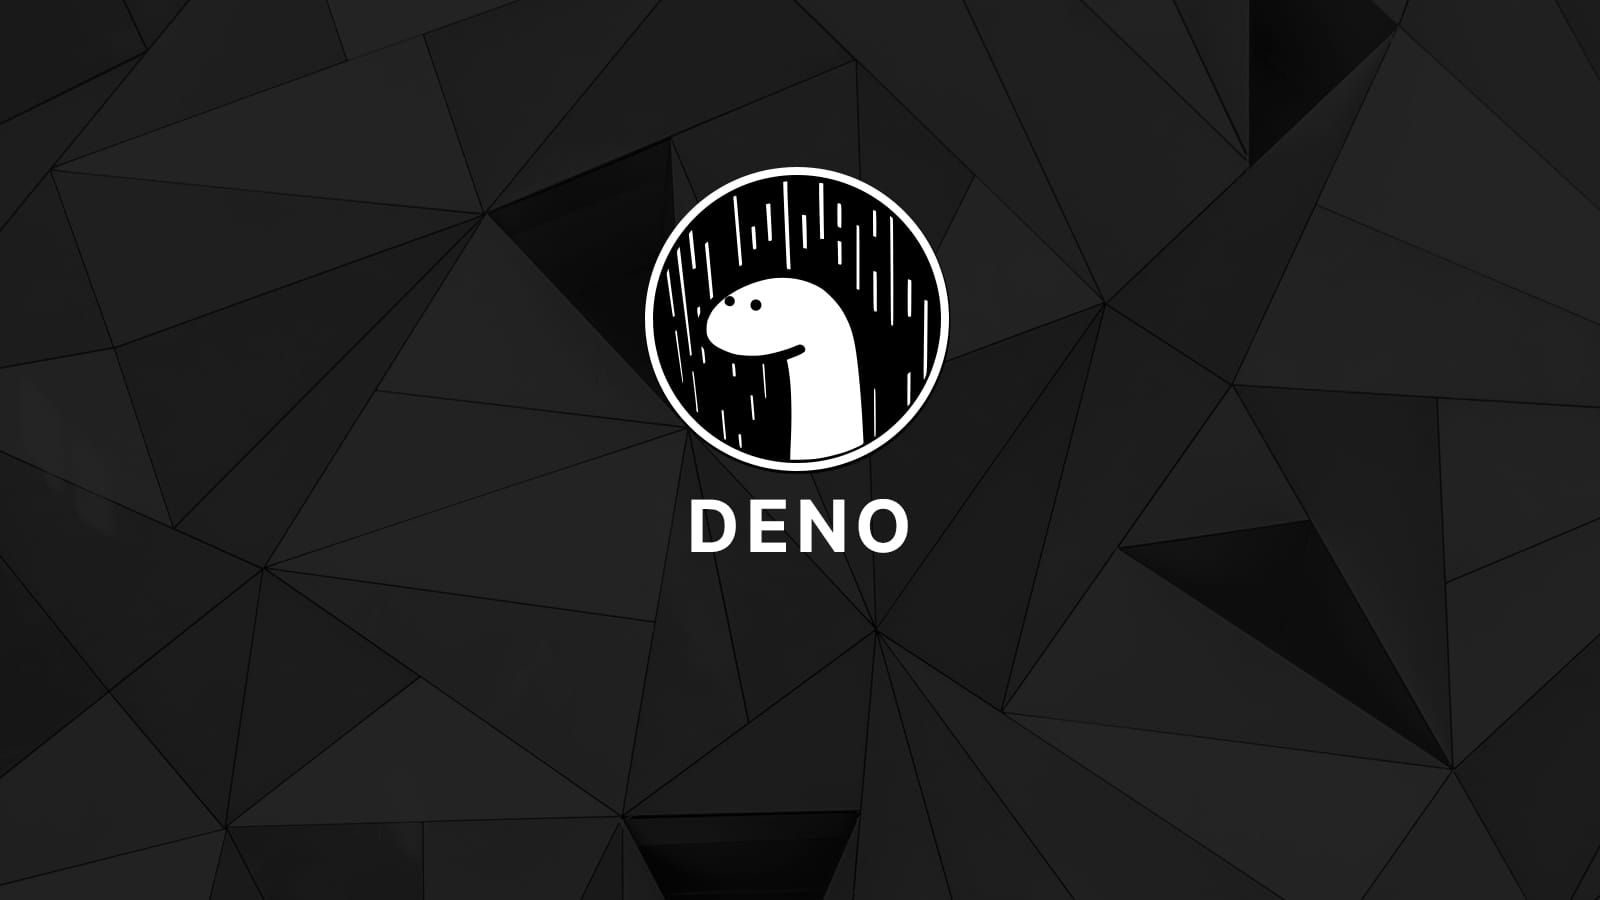 Meet Deno - The Humble Giant